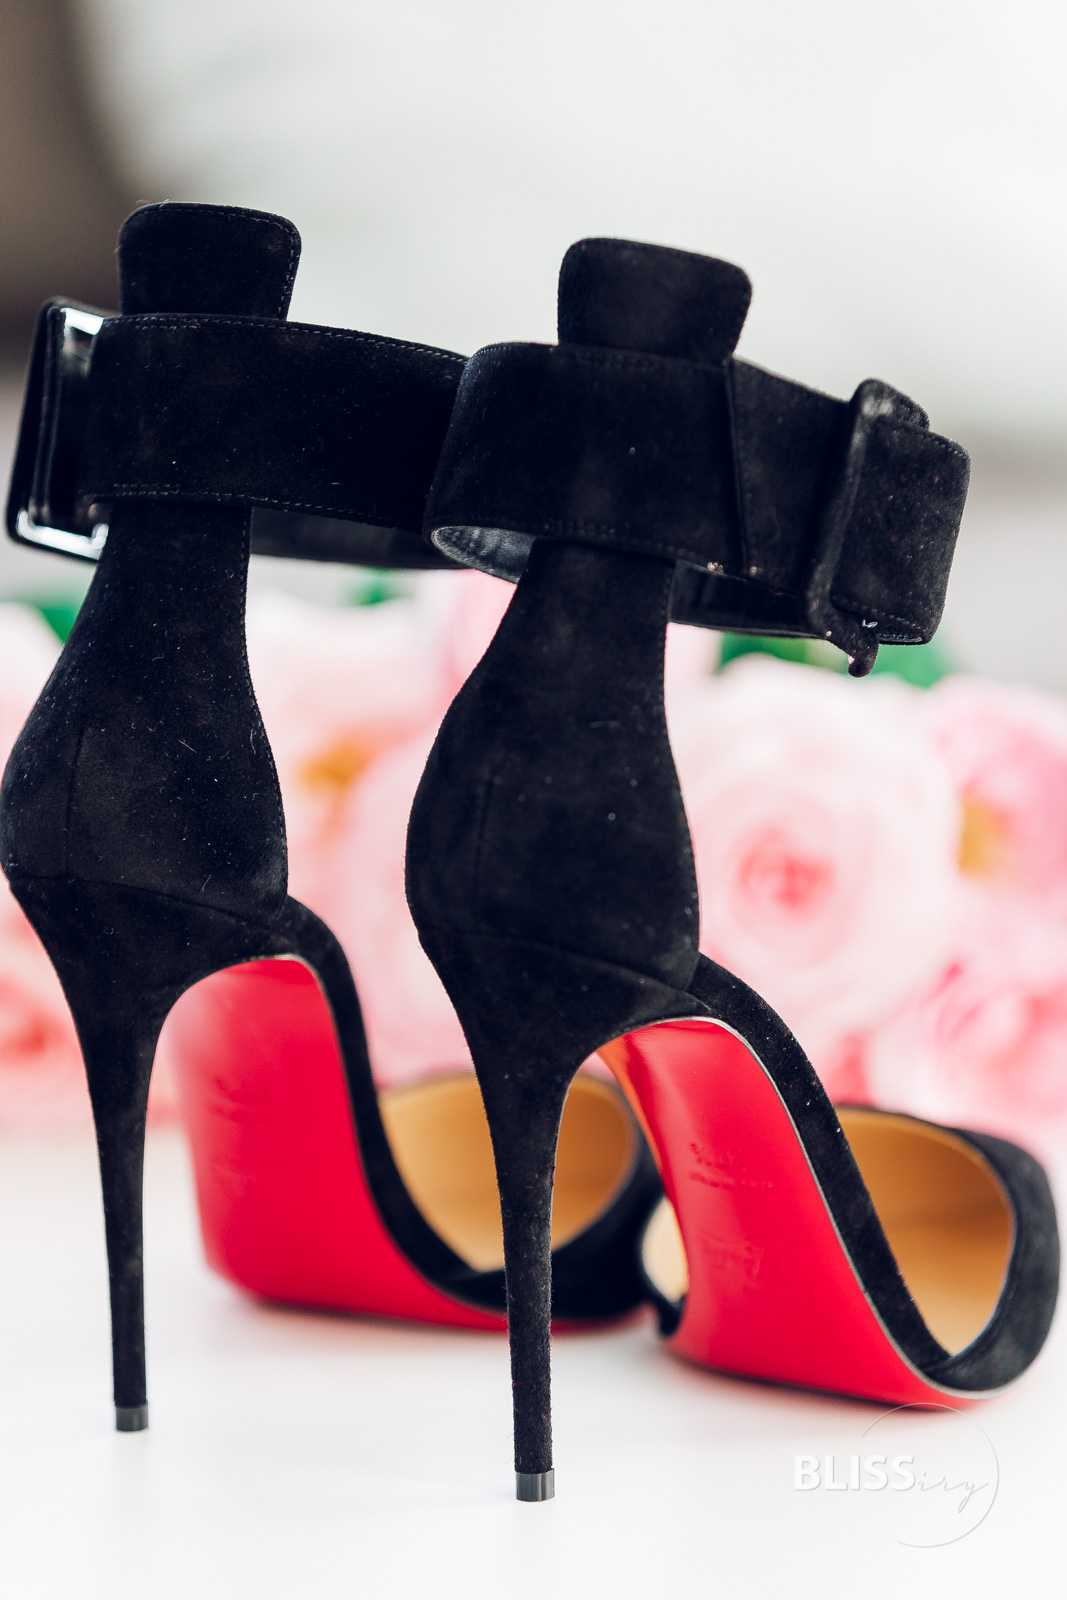 Harler Veau Velours Ankle Cuff 10cm - Christian Louboutin High Heels - Luxusblog Vanessa Pur - Designer High Heels - Fashionblogger - Red Carpet